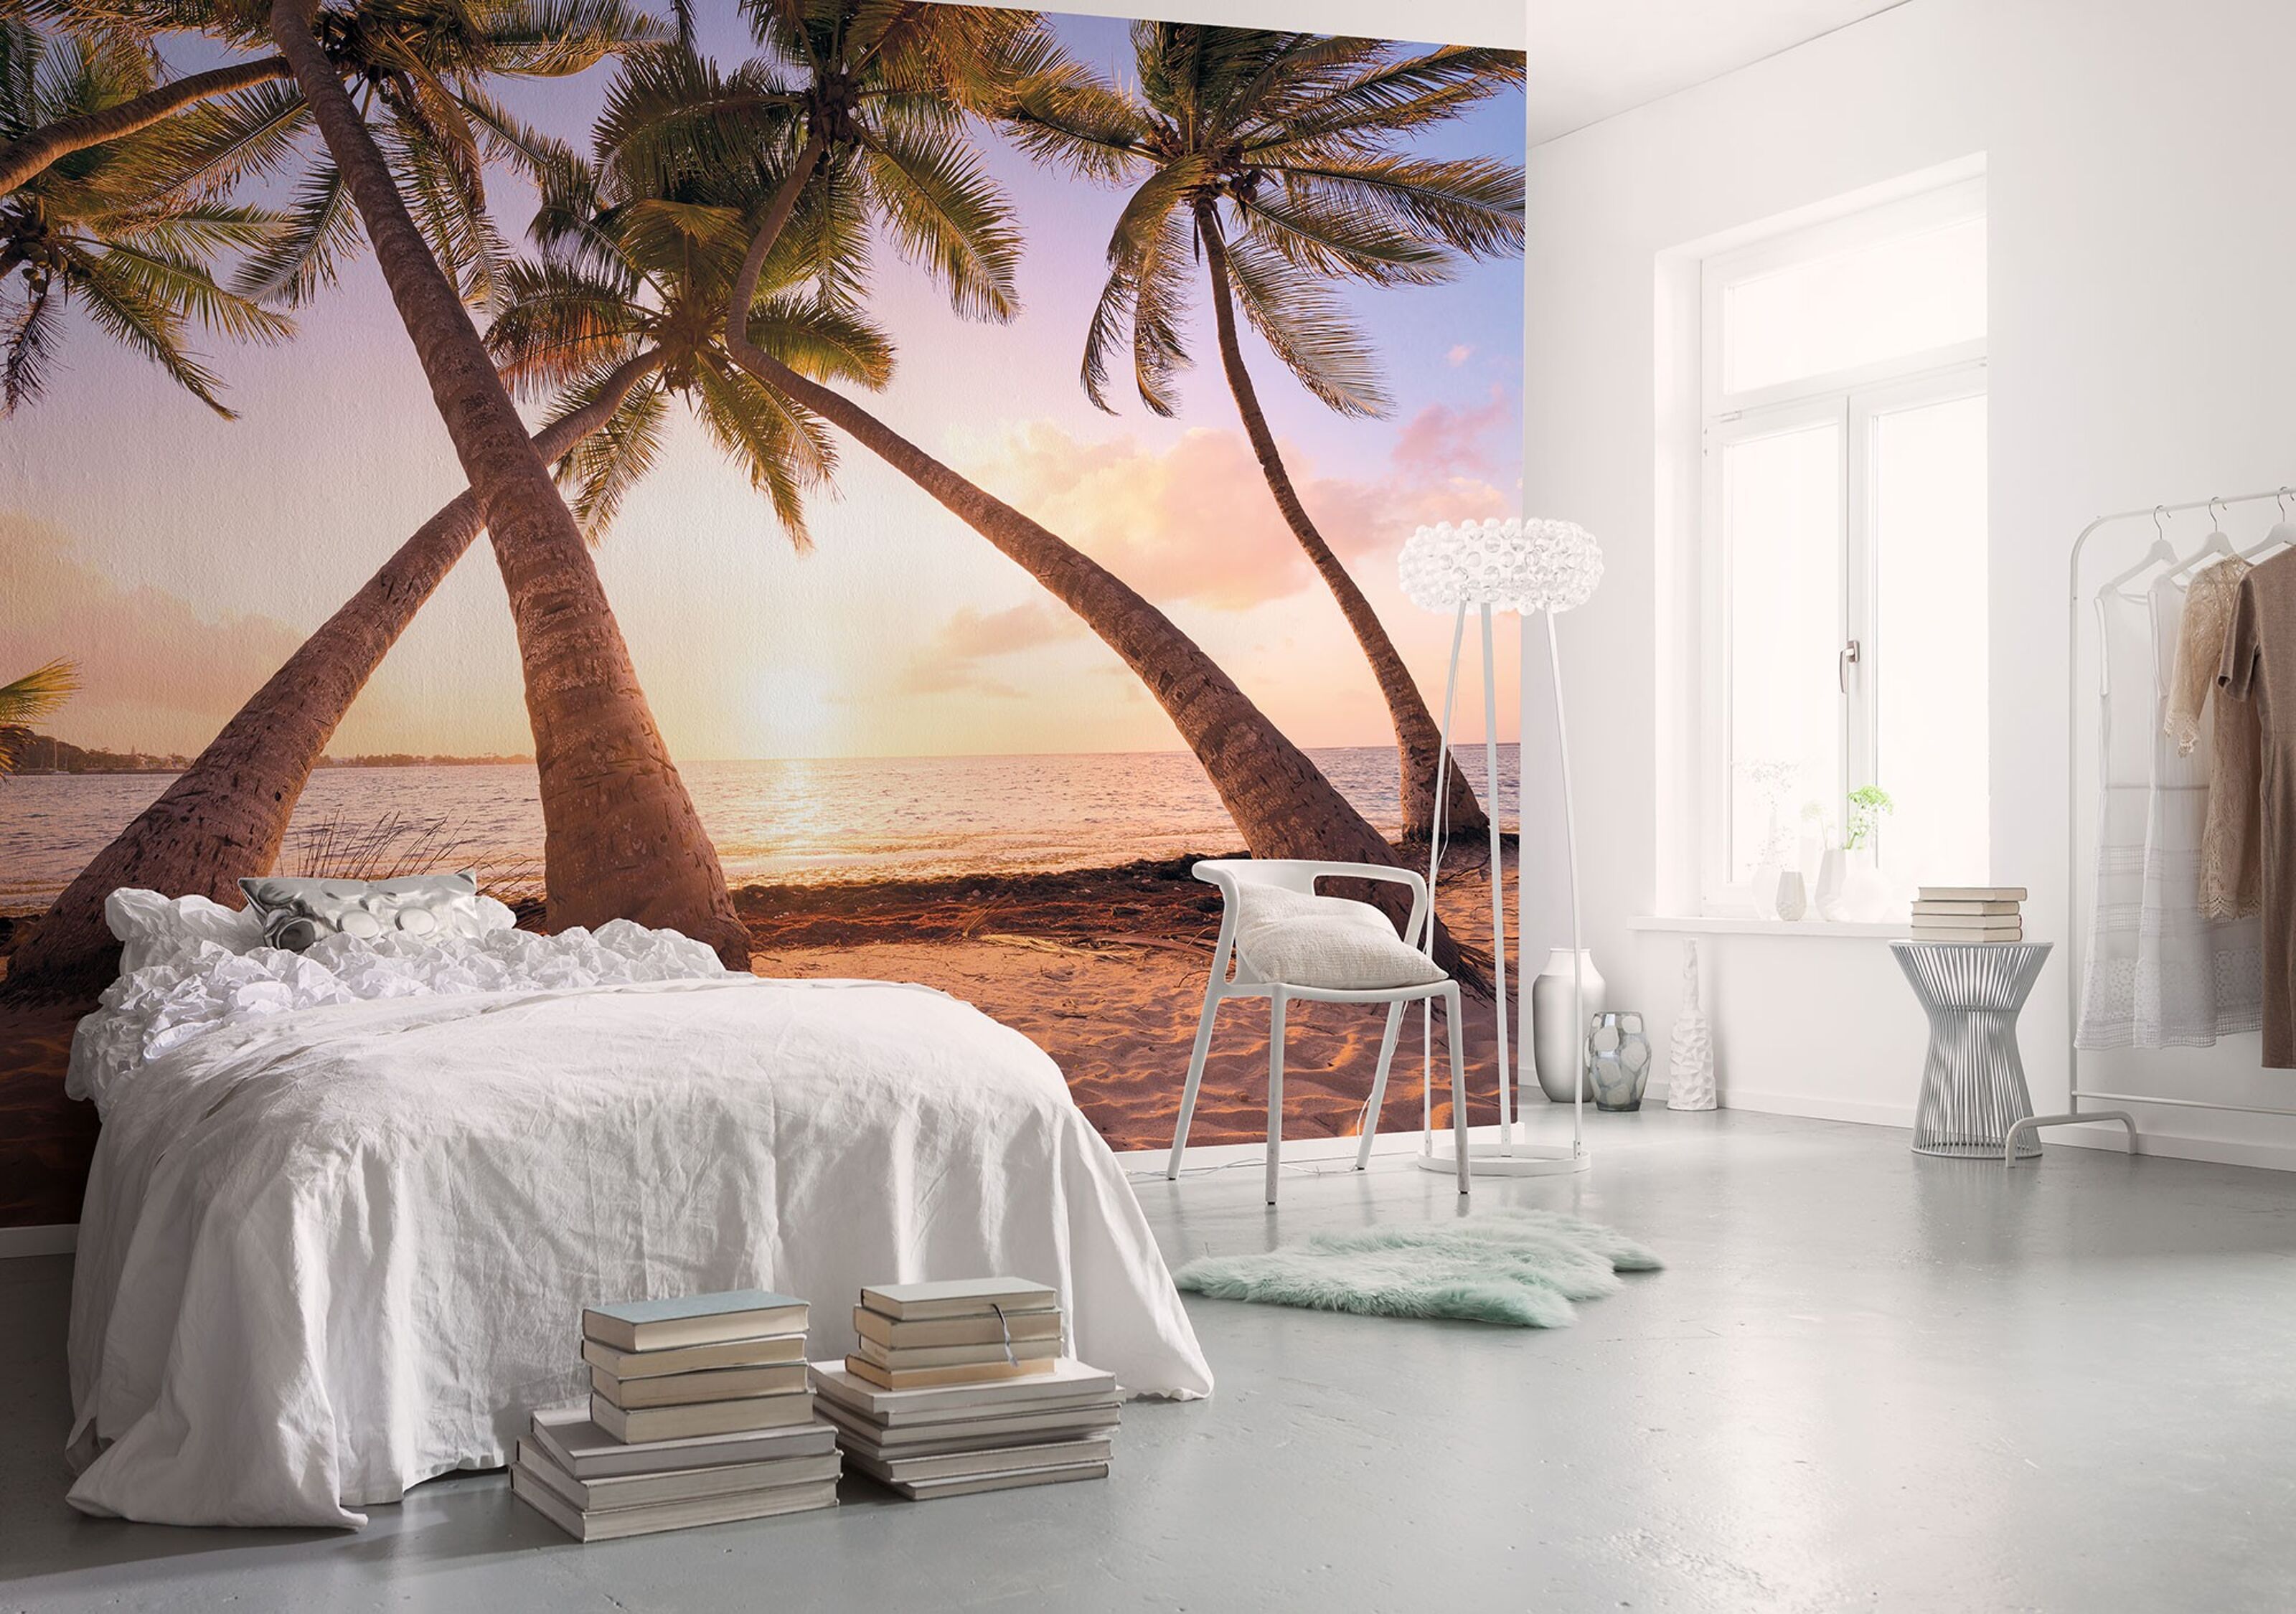 Buy wholesale Non-woven x Reaching 400 - - 250 size cm photo wallpaper the Sun